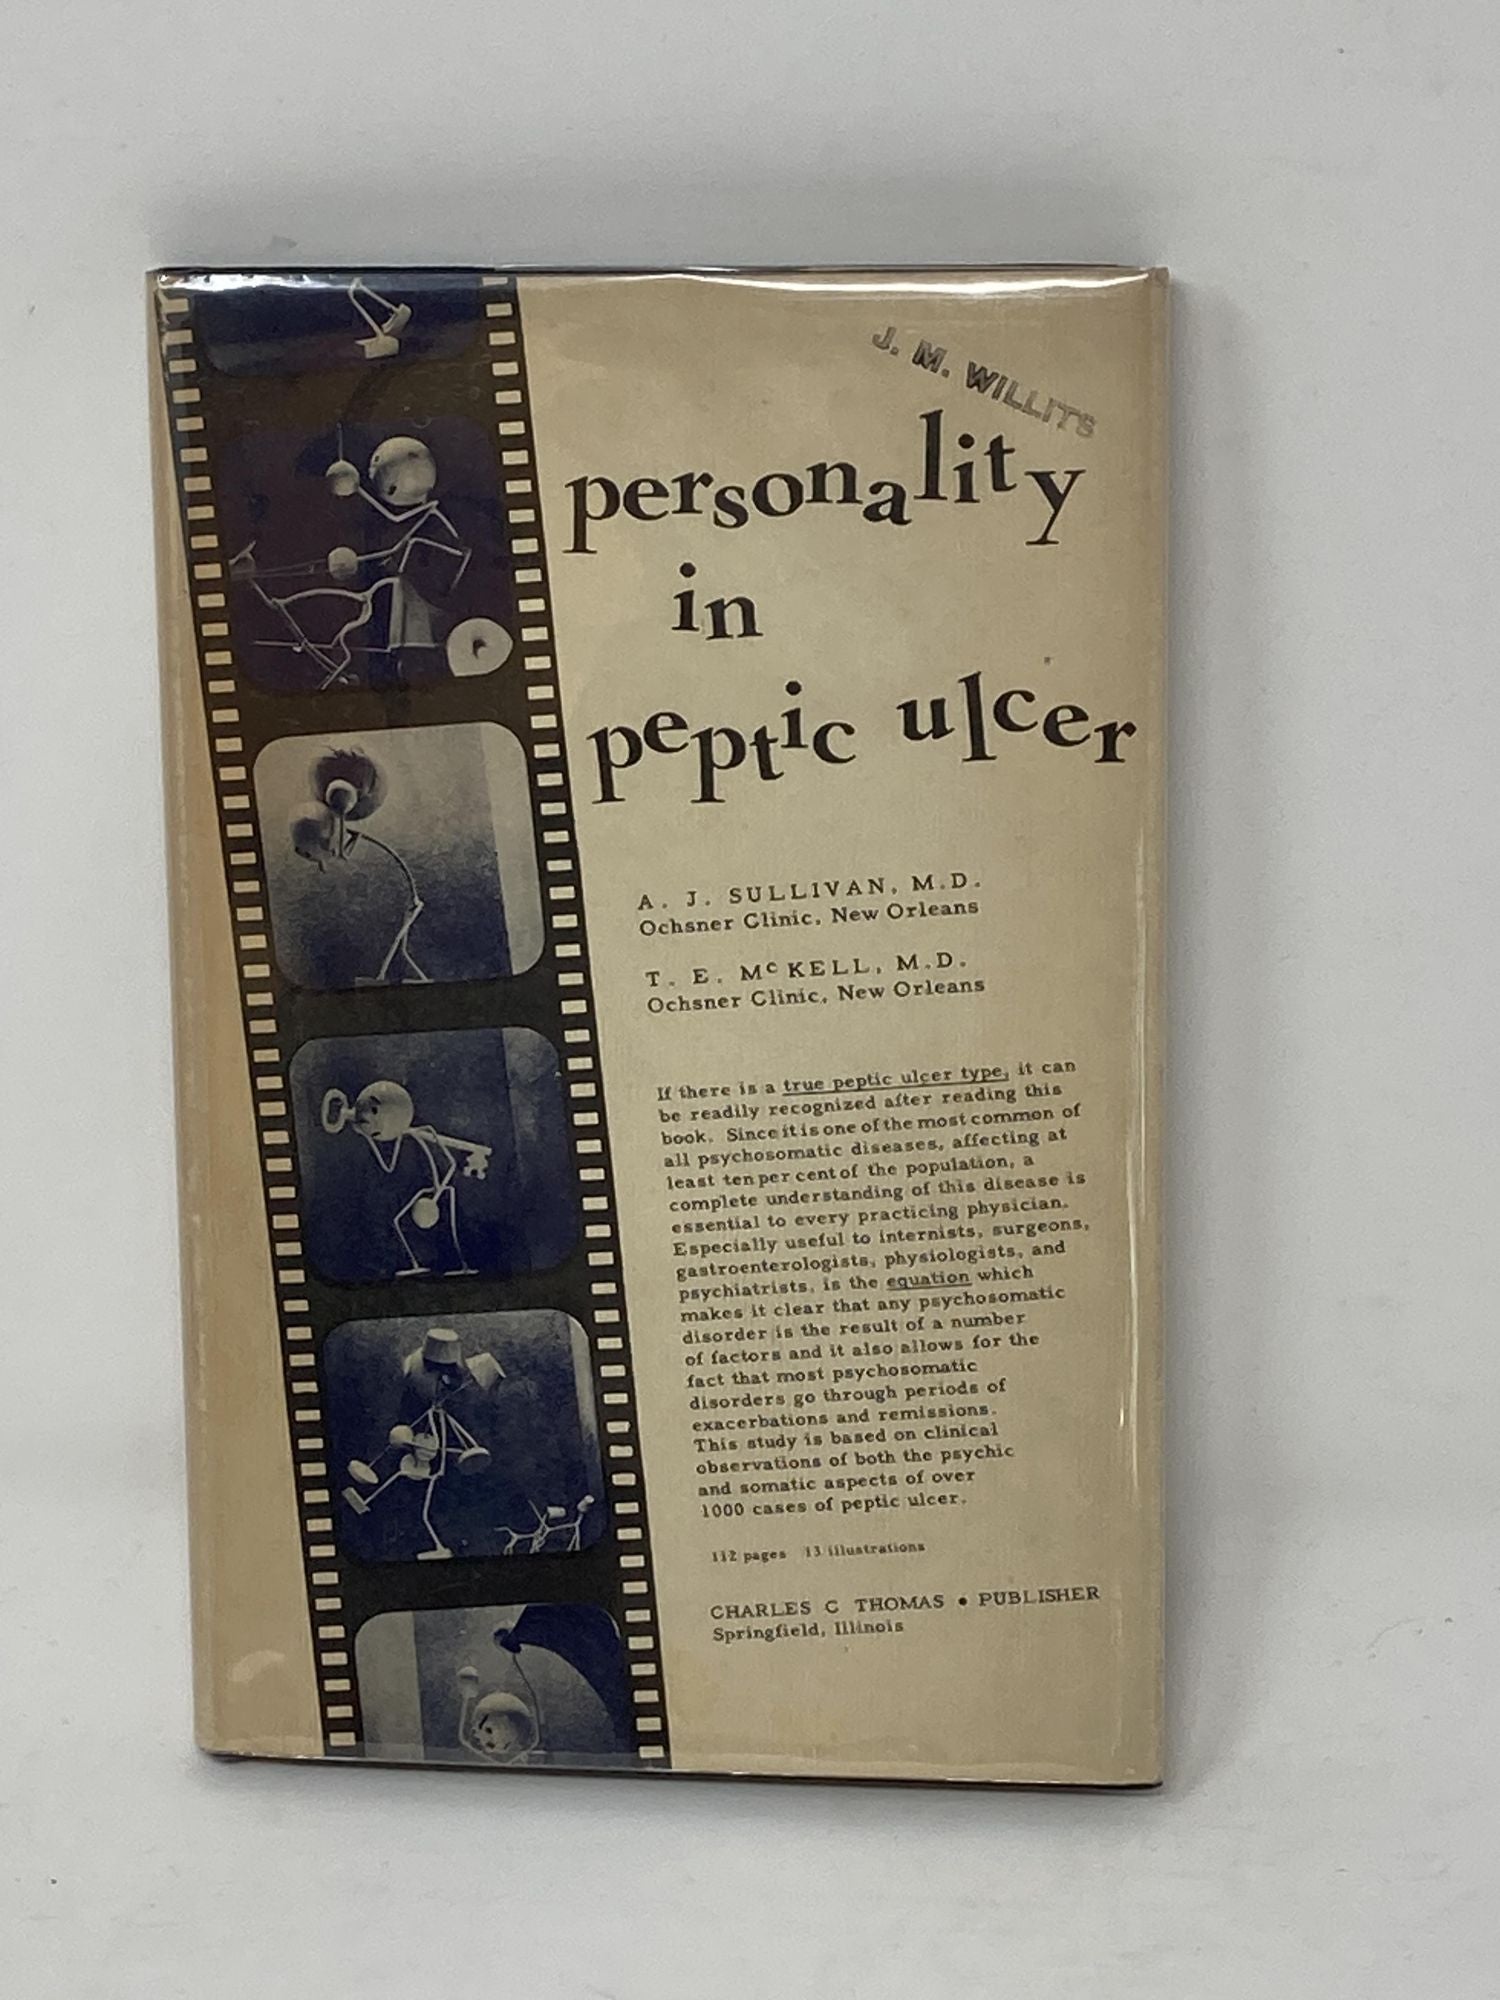 Sullivan, Albert J. and Thomas E. McKell - Personality in Peptic Ulcer